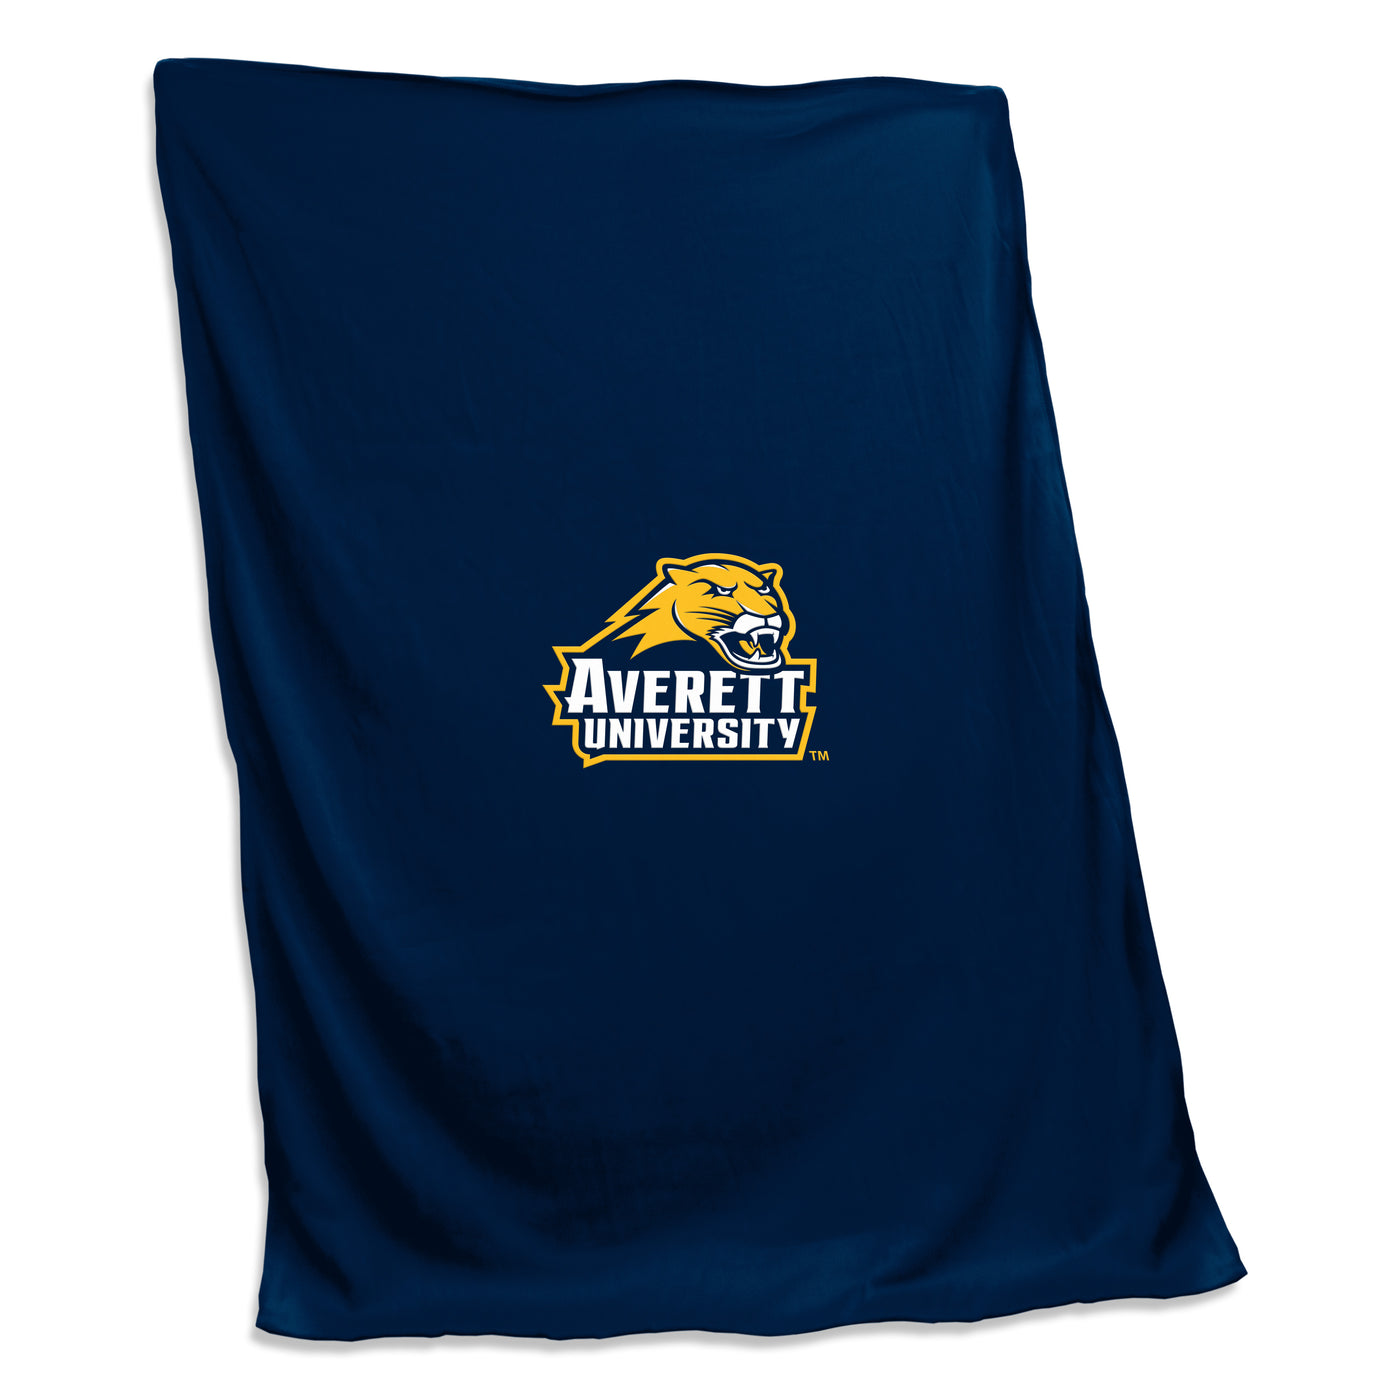 Averett University Screened Sweatshirt Blanket